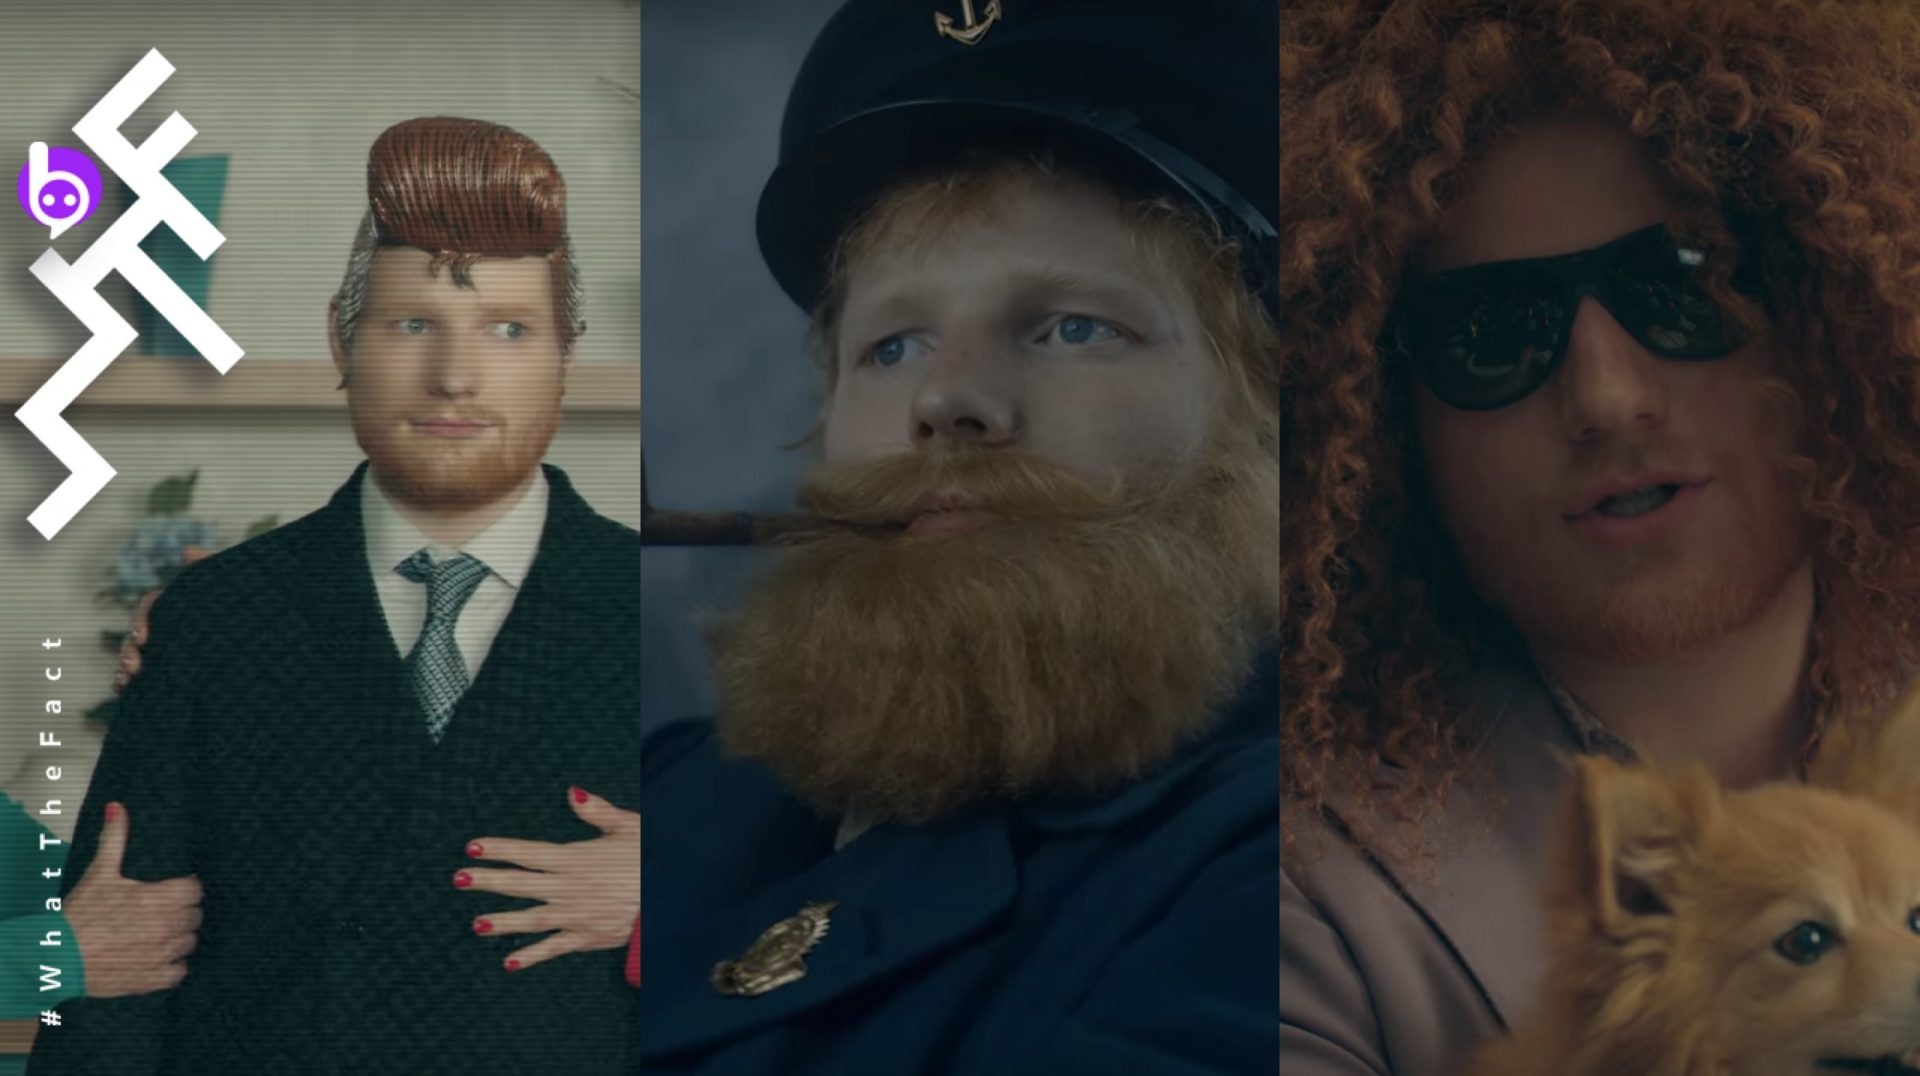 Ed Sheeran เปลี่ยนลุคหลายแนวล้อเลียนหนังดังใน MV “Antisocial” พร้อมอัลบั้มเต็มชุดใหม่ที่ฟังได้แล้ววันนี้ !!!